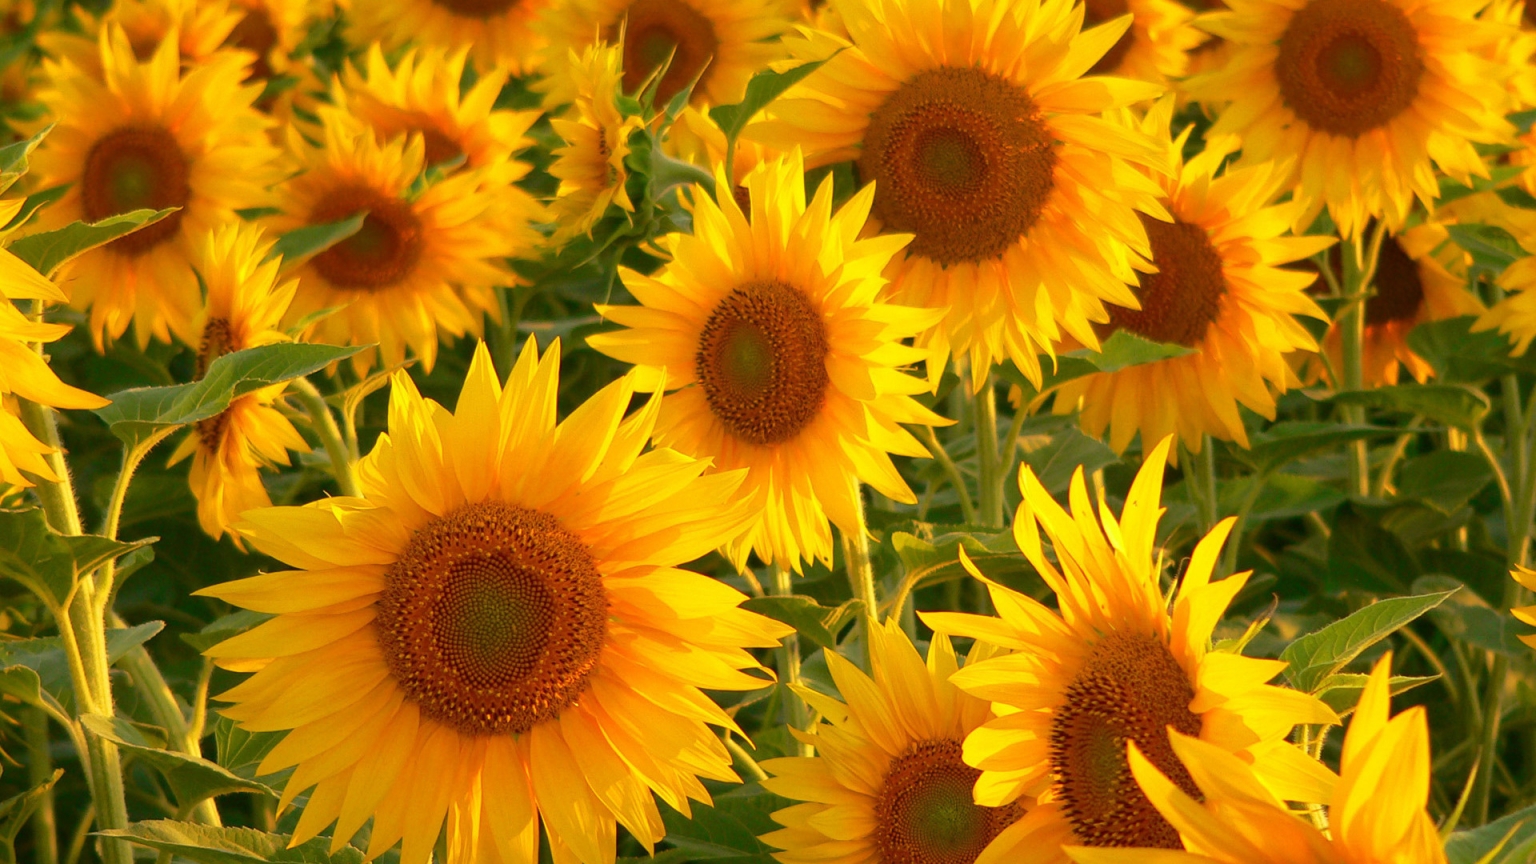 Sunflowers for 1536 x 864 HDTV resolution